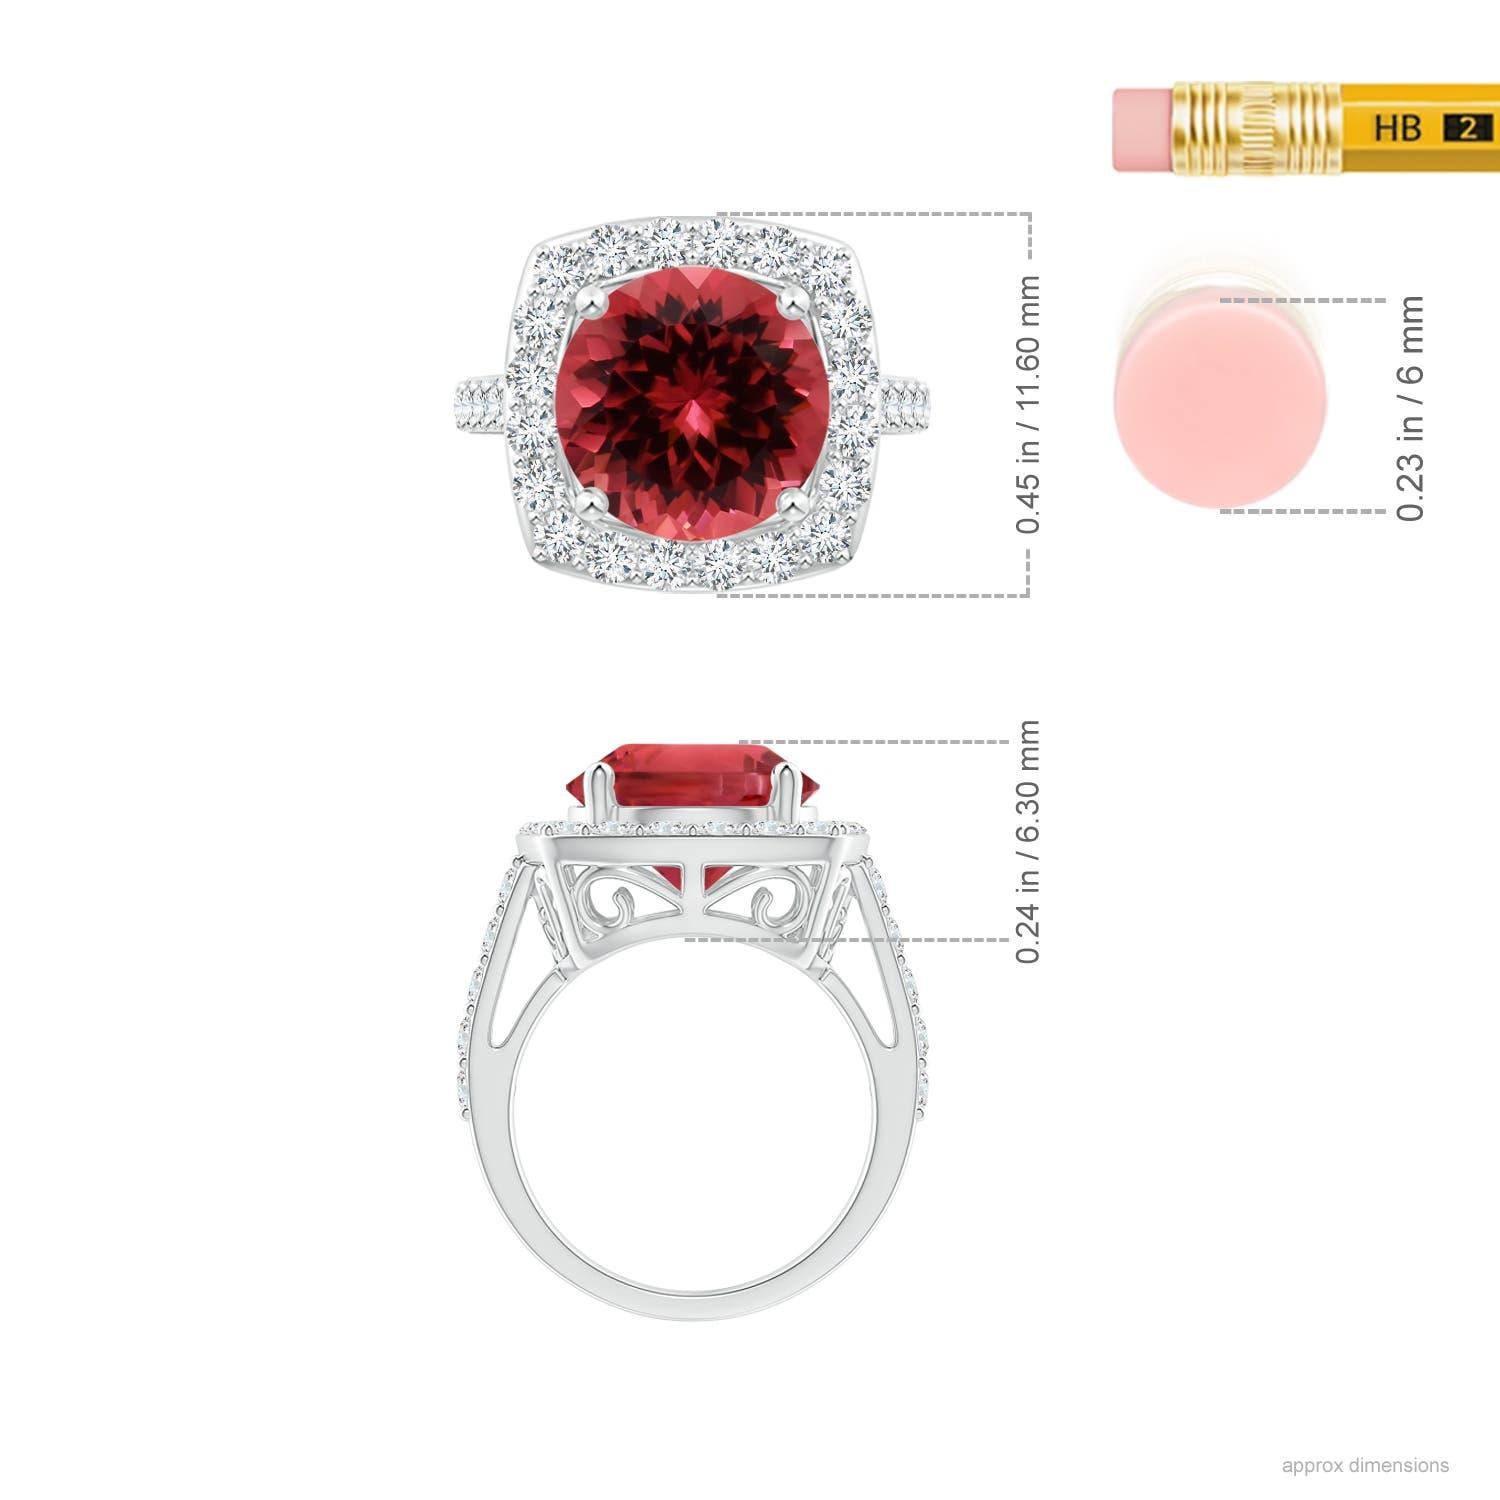 En vente :  ANGARA, bague halo de tourmaline rose de 2,15 carats, certifiée GIA 3